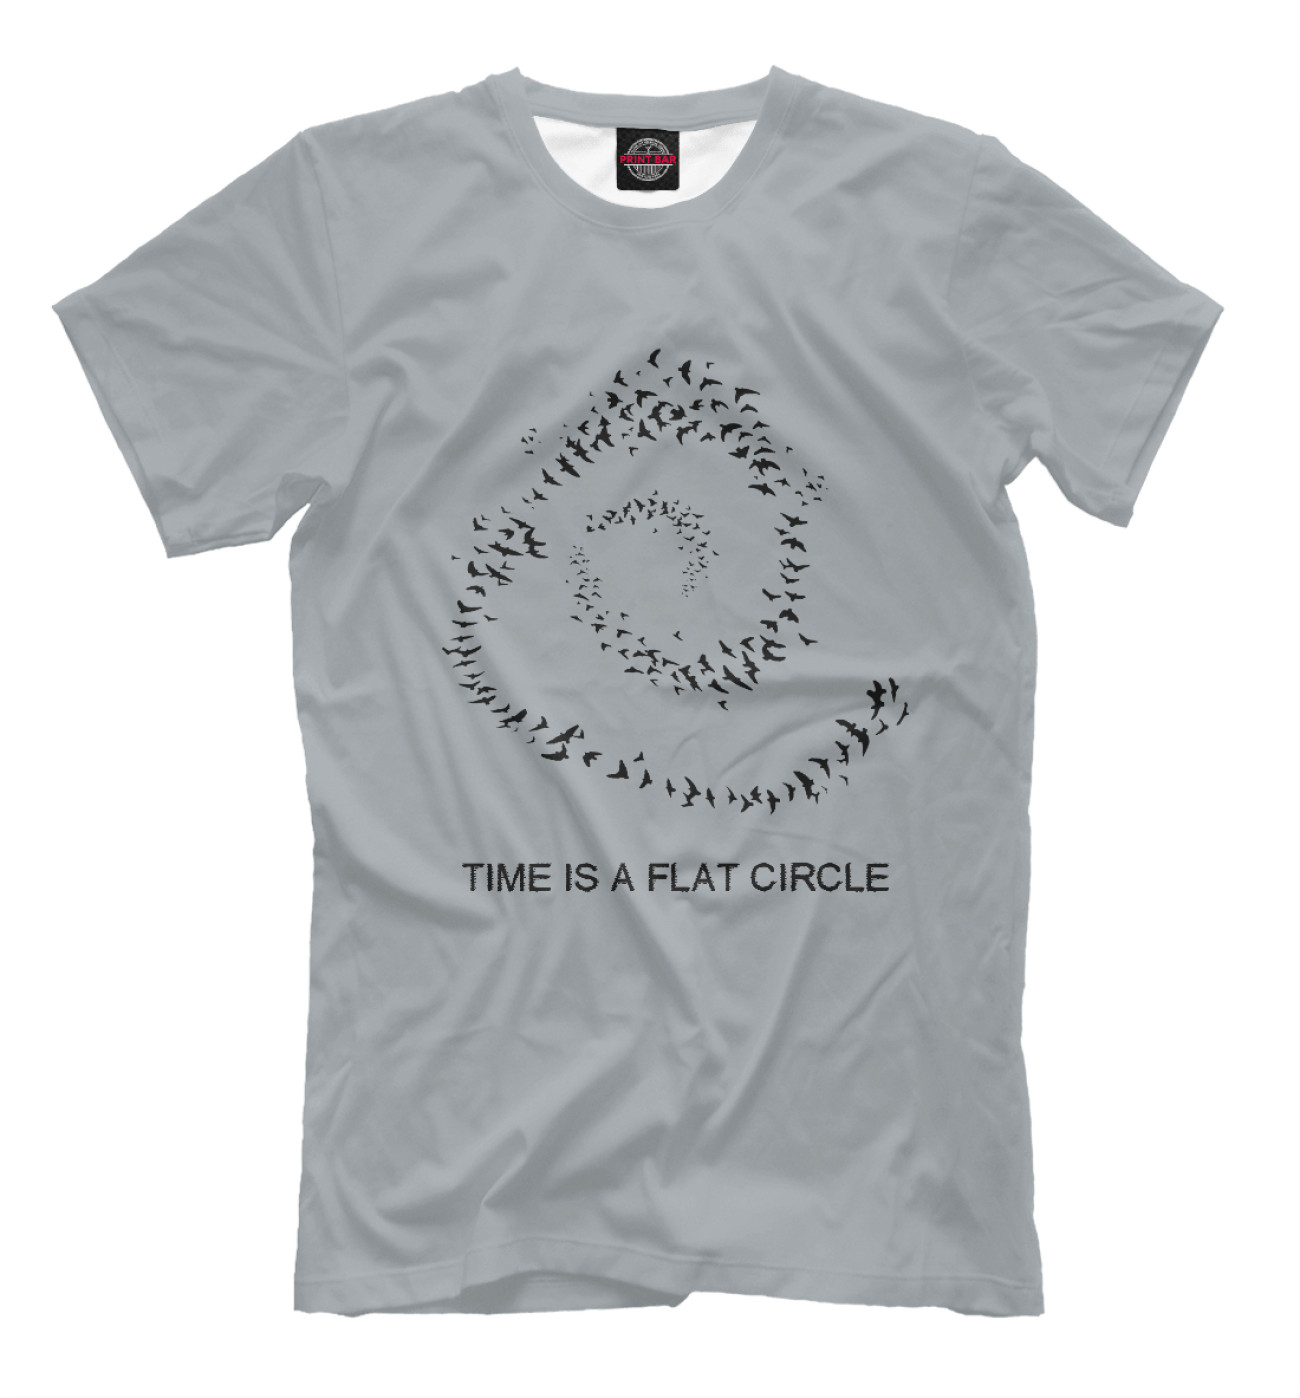 Мужская Футболка Time is a flat circle, артикул: NAS-854695-fut-2